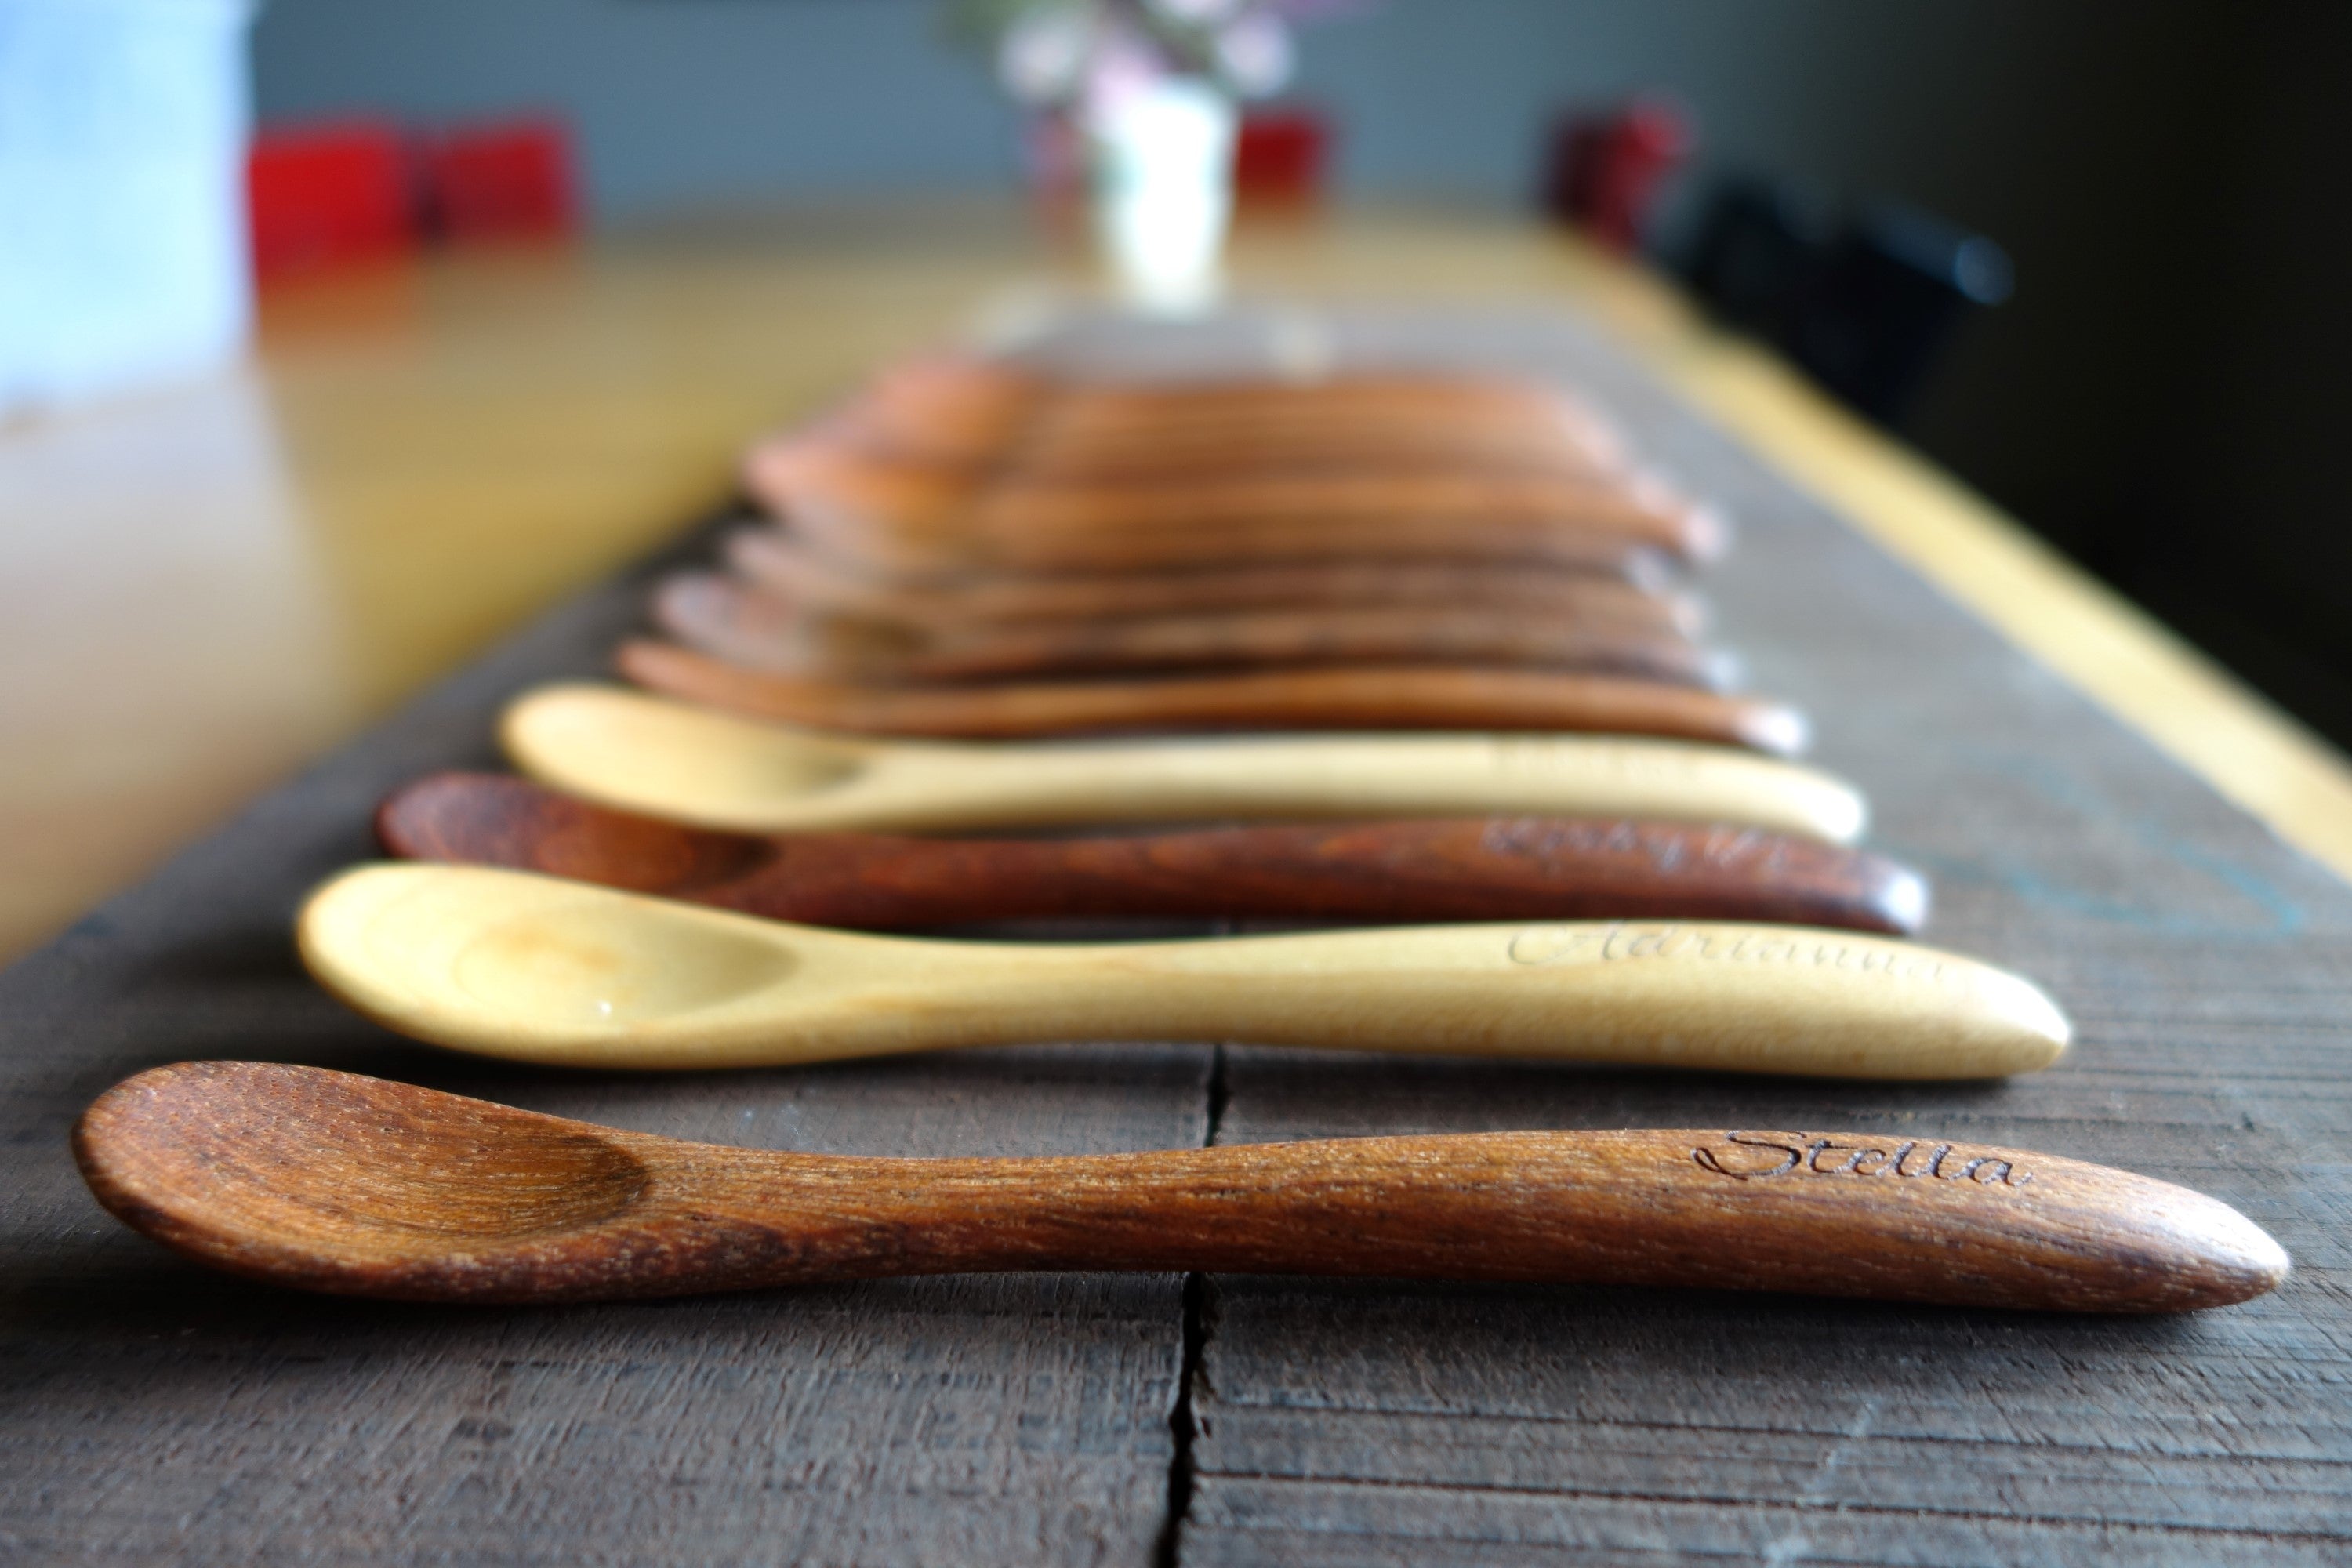 Wooden spoons as heirlooms